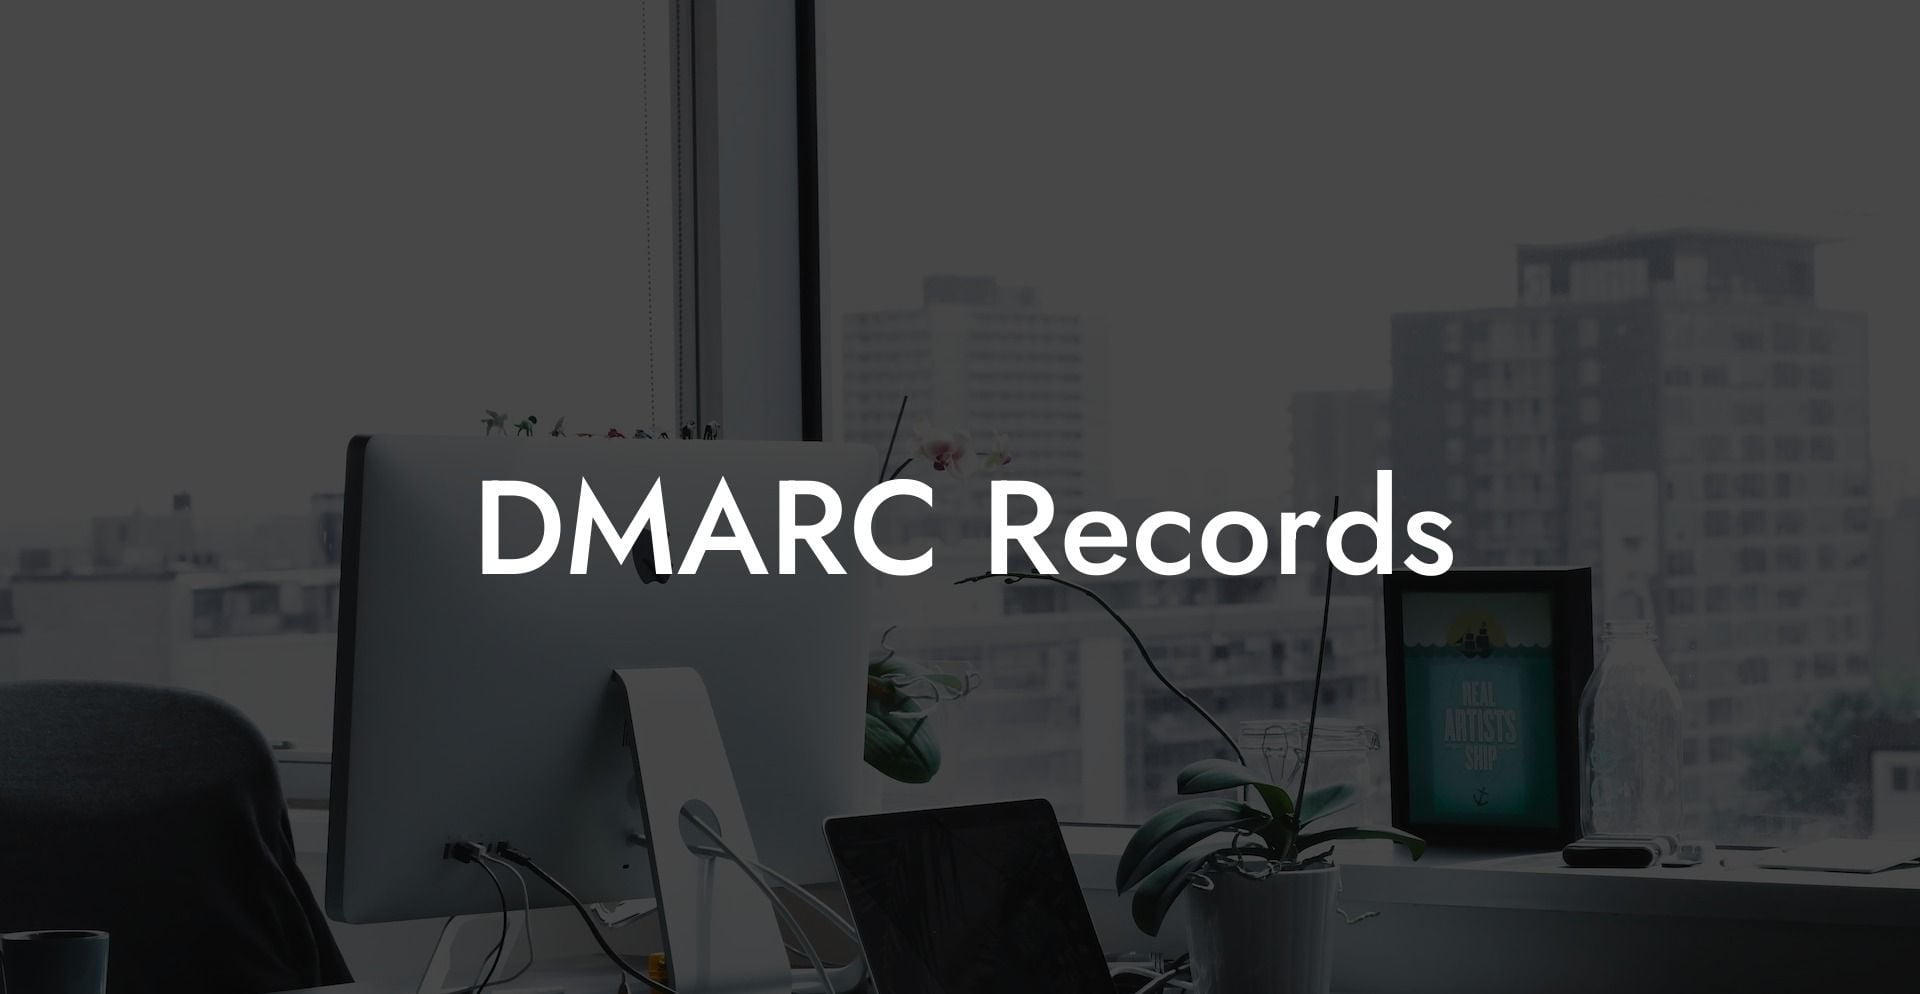 DMARC Records